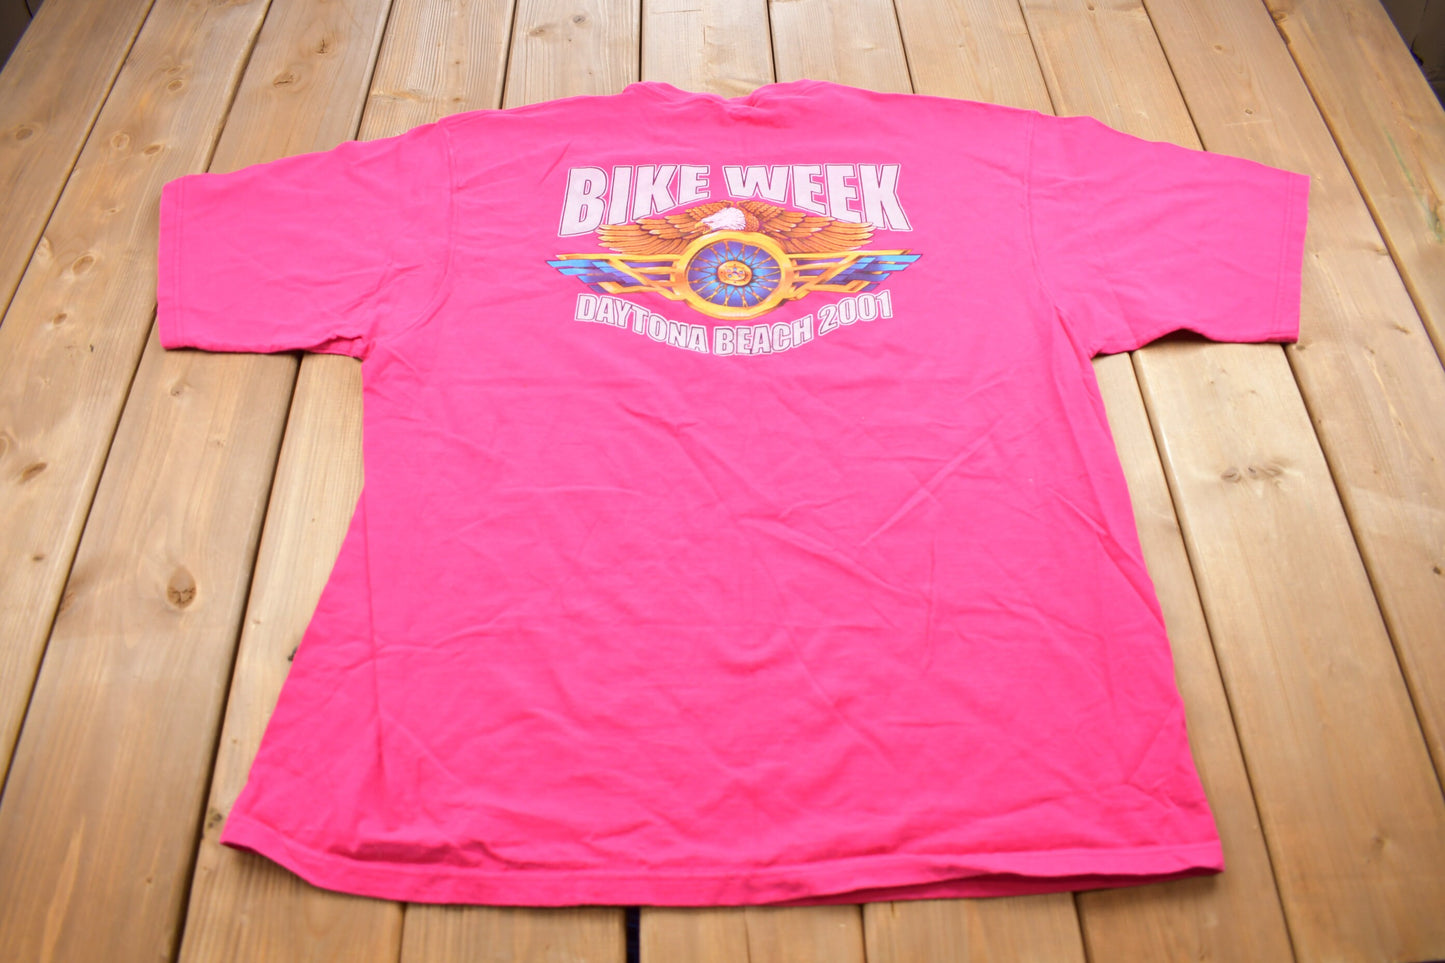 Vintage Daytona Beach 2001 Bike Week Souvenir T Shirt / Streetwear / Rare Vintage / Vacation Tee / Travel T Shirt / American Vintage